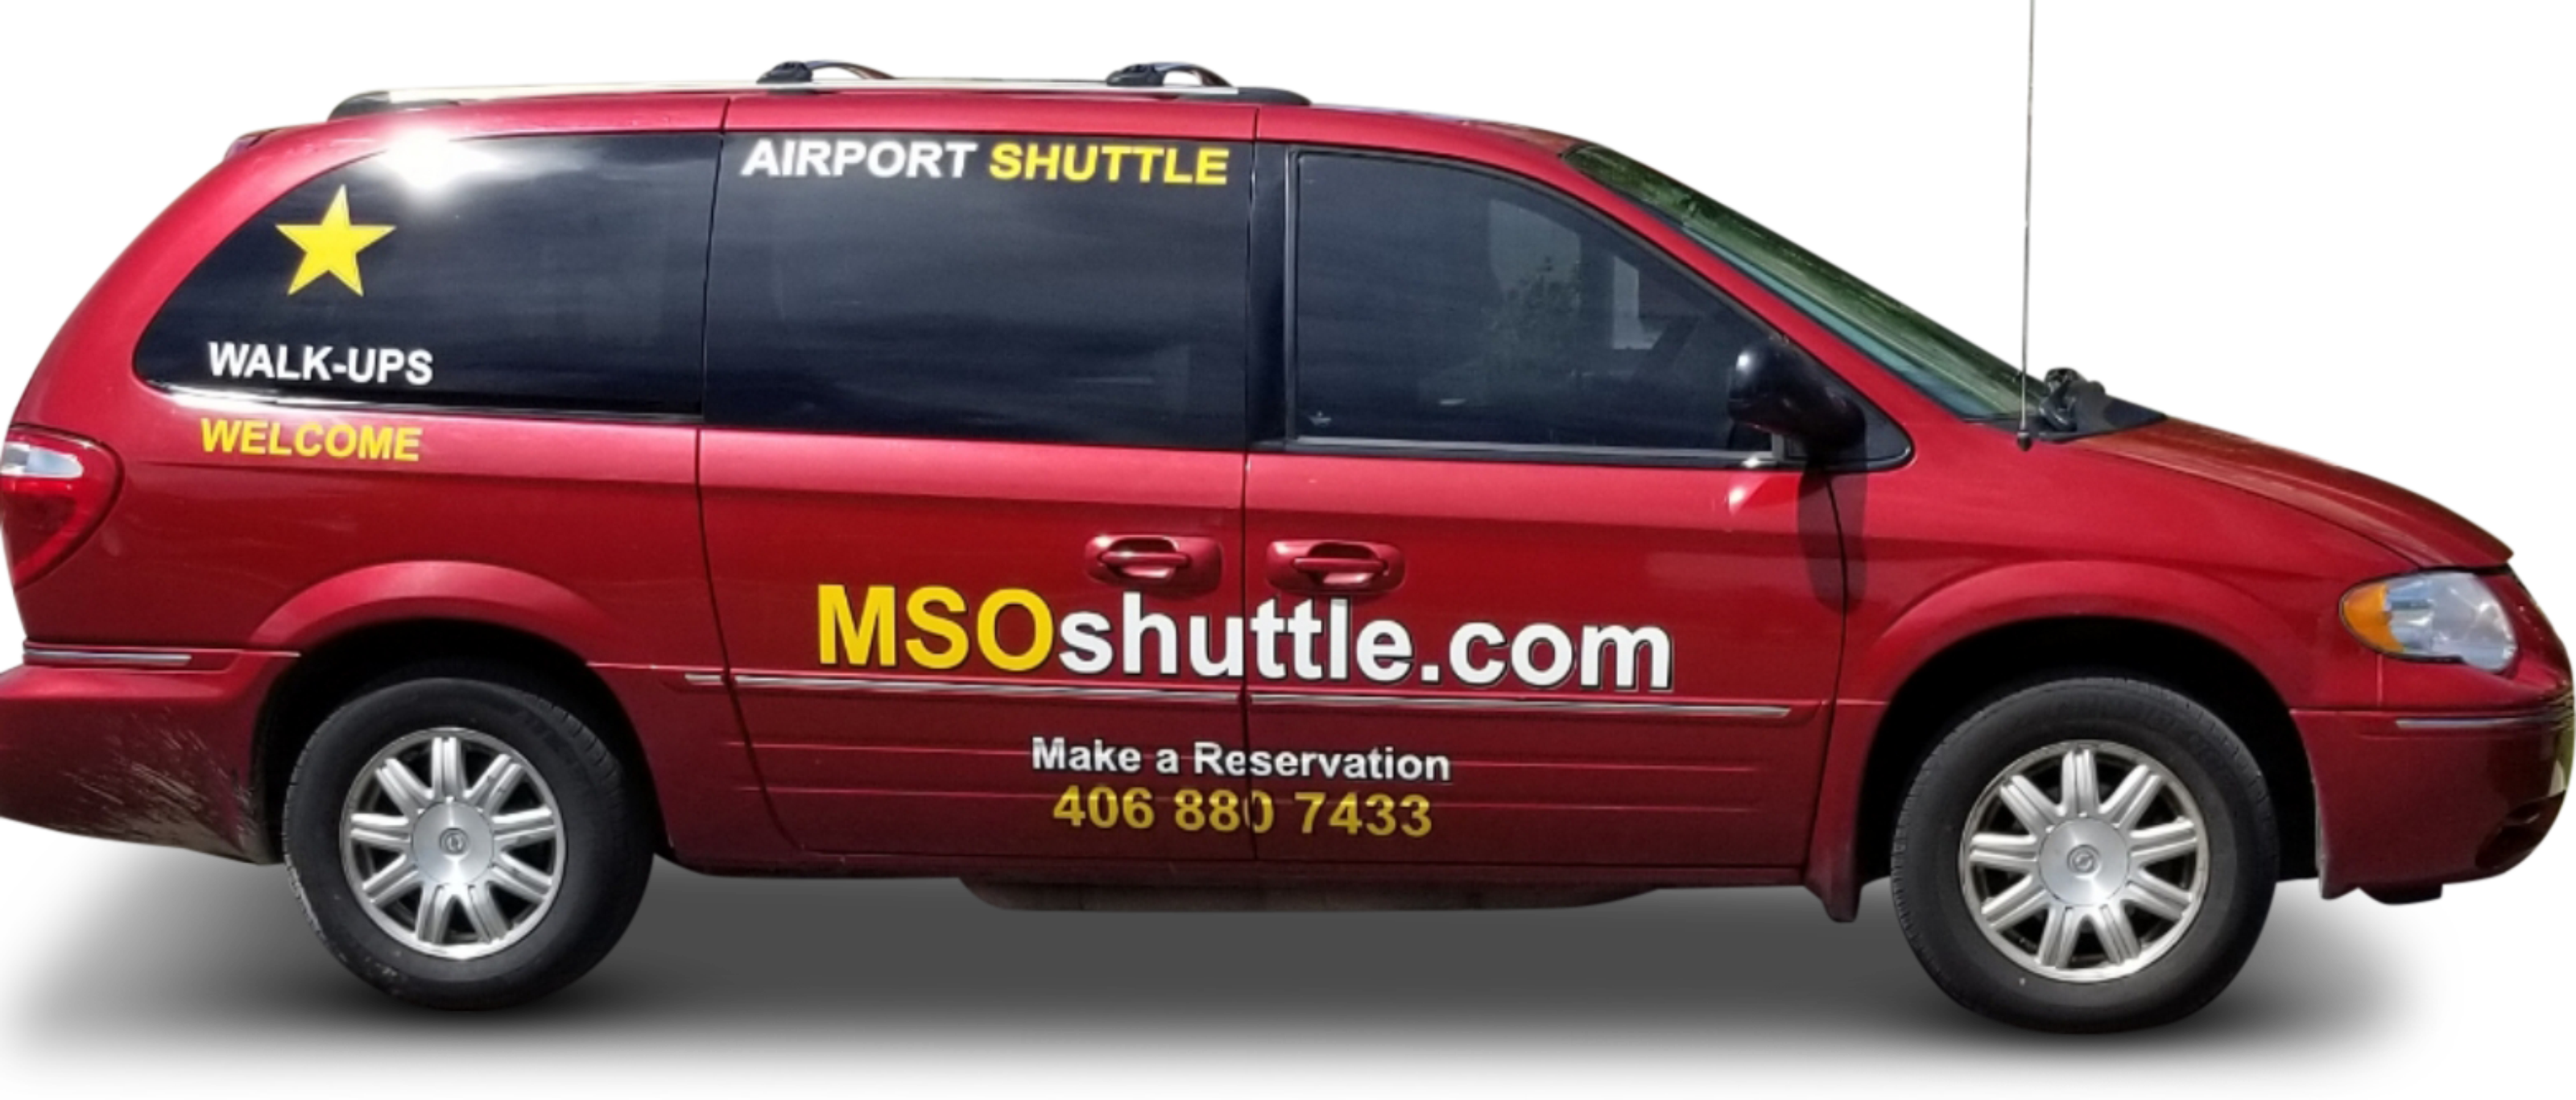 red vans airport shuttle